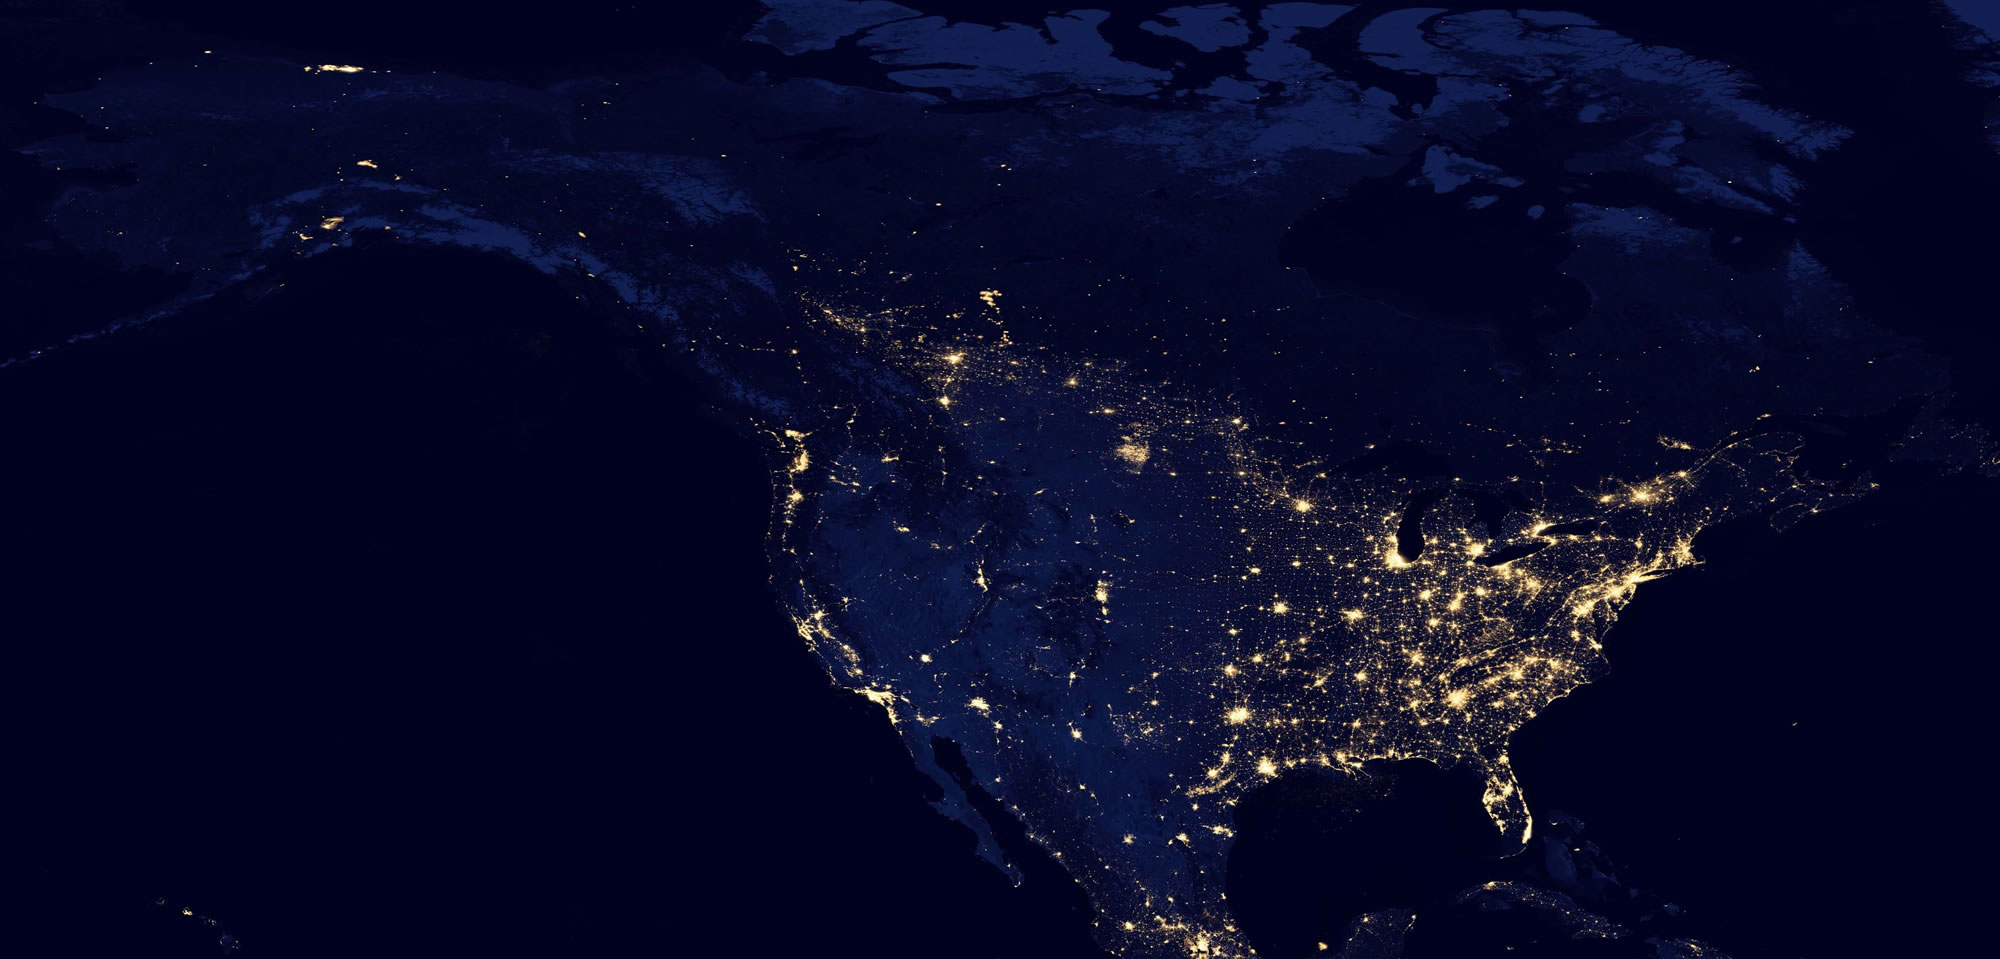 http://geology.com/articles/night-satellite/satellite-photo-united-states-at-night-lg.jpg